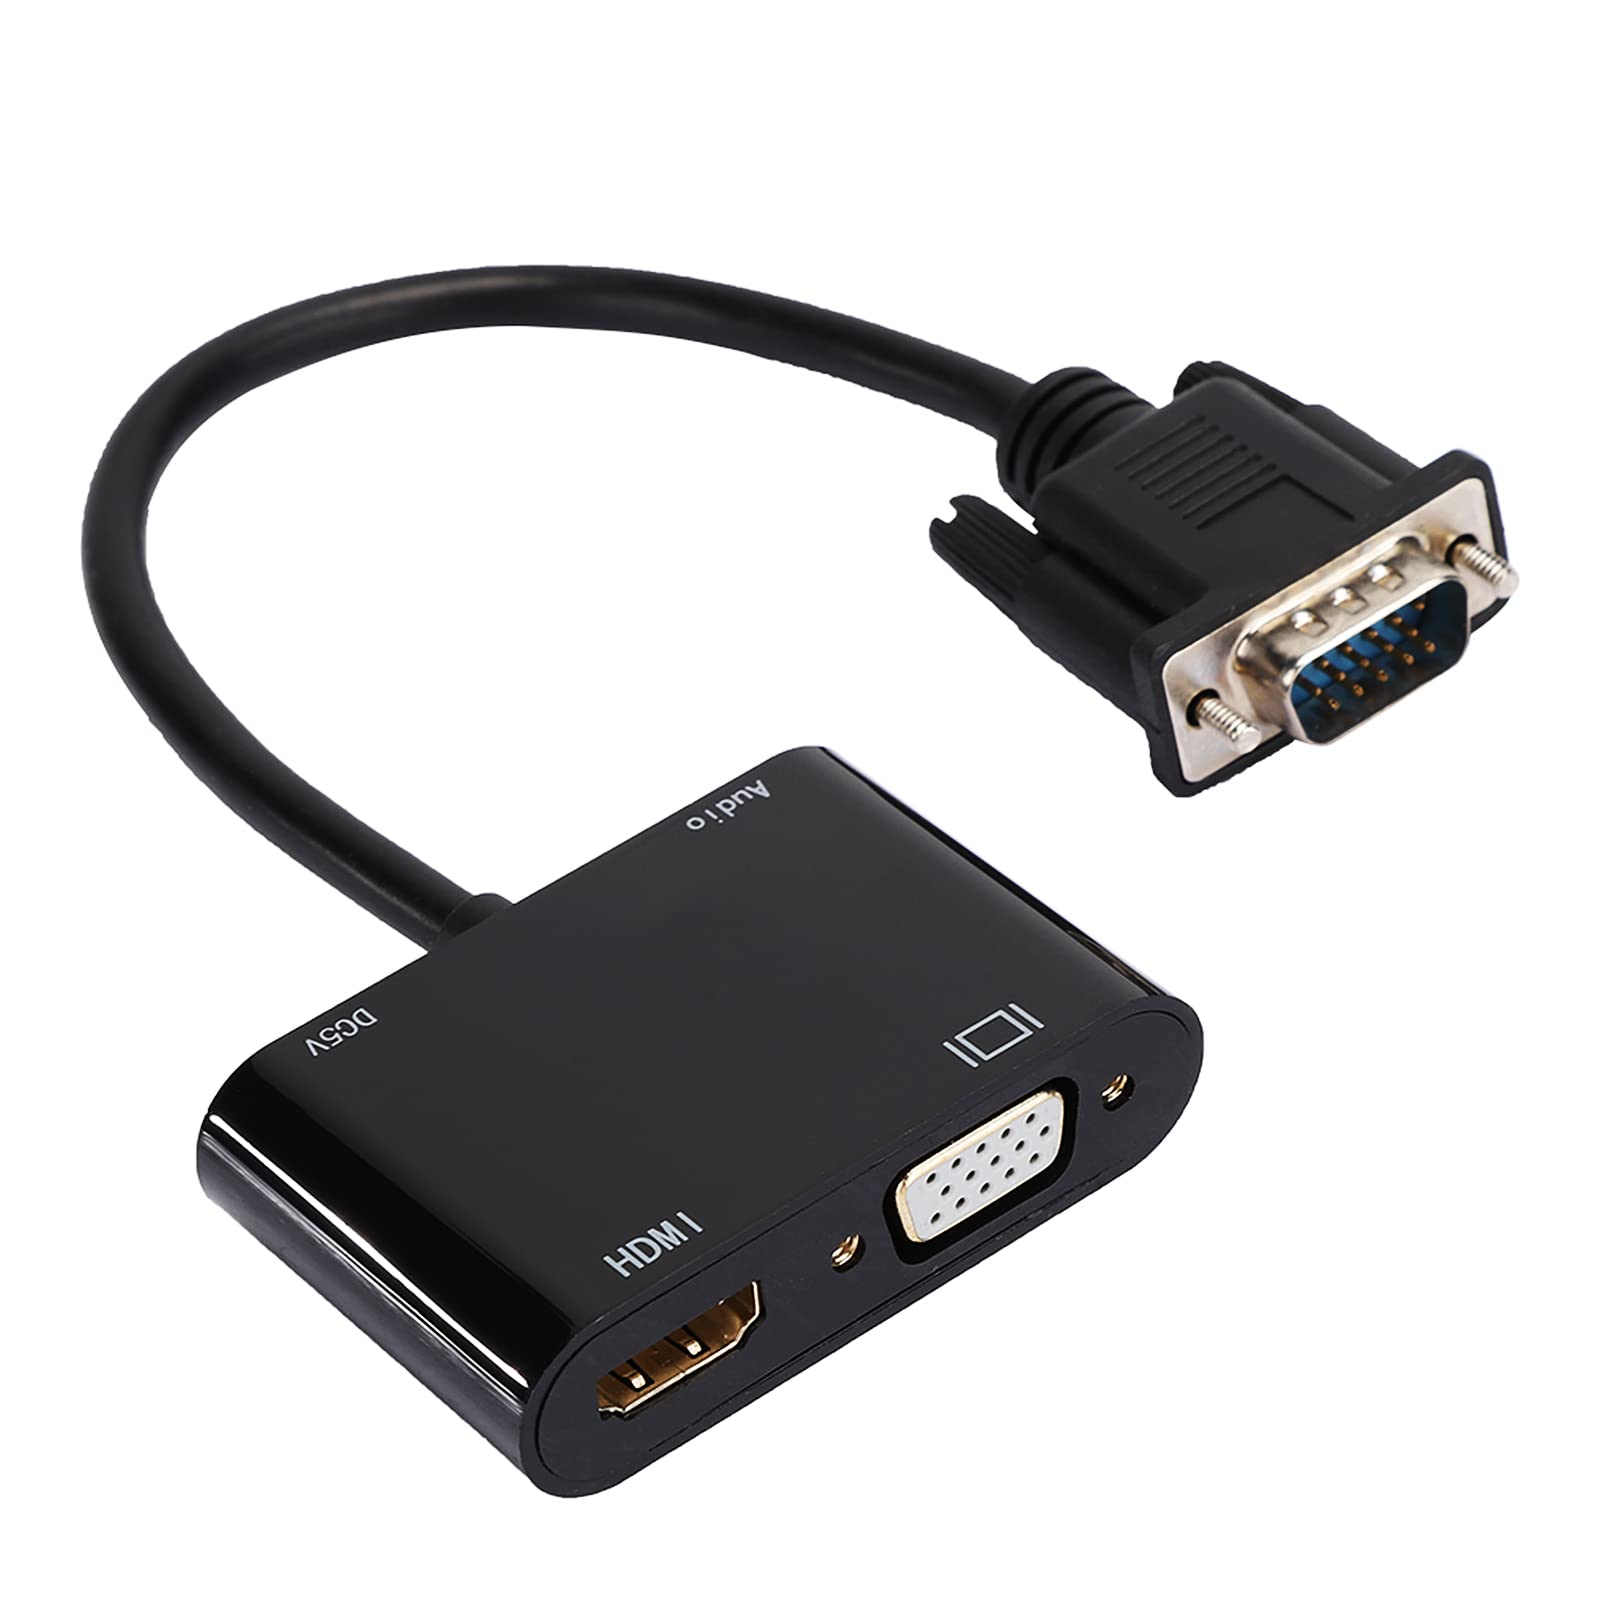 Bindpo VGA zu HDMI Adapter, VGA Stecker zu 1080P HDMI + VGA Konverter mit 3,5 mm Stereo Audio, Dongle für TV, Computer, Laptop, Projektor